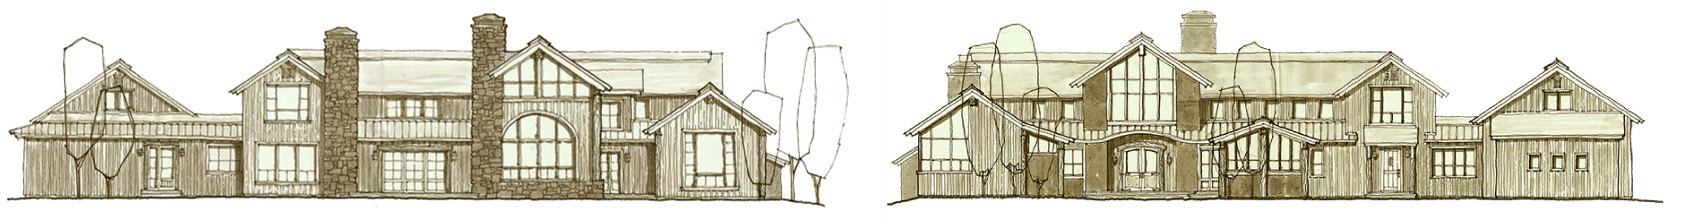 jackson-hole-residence-mittmann-architect-sketch